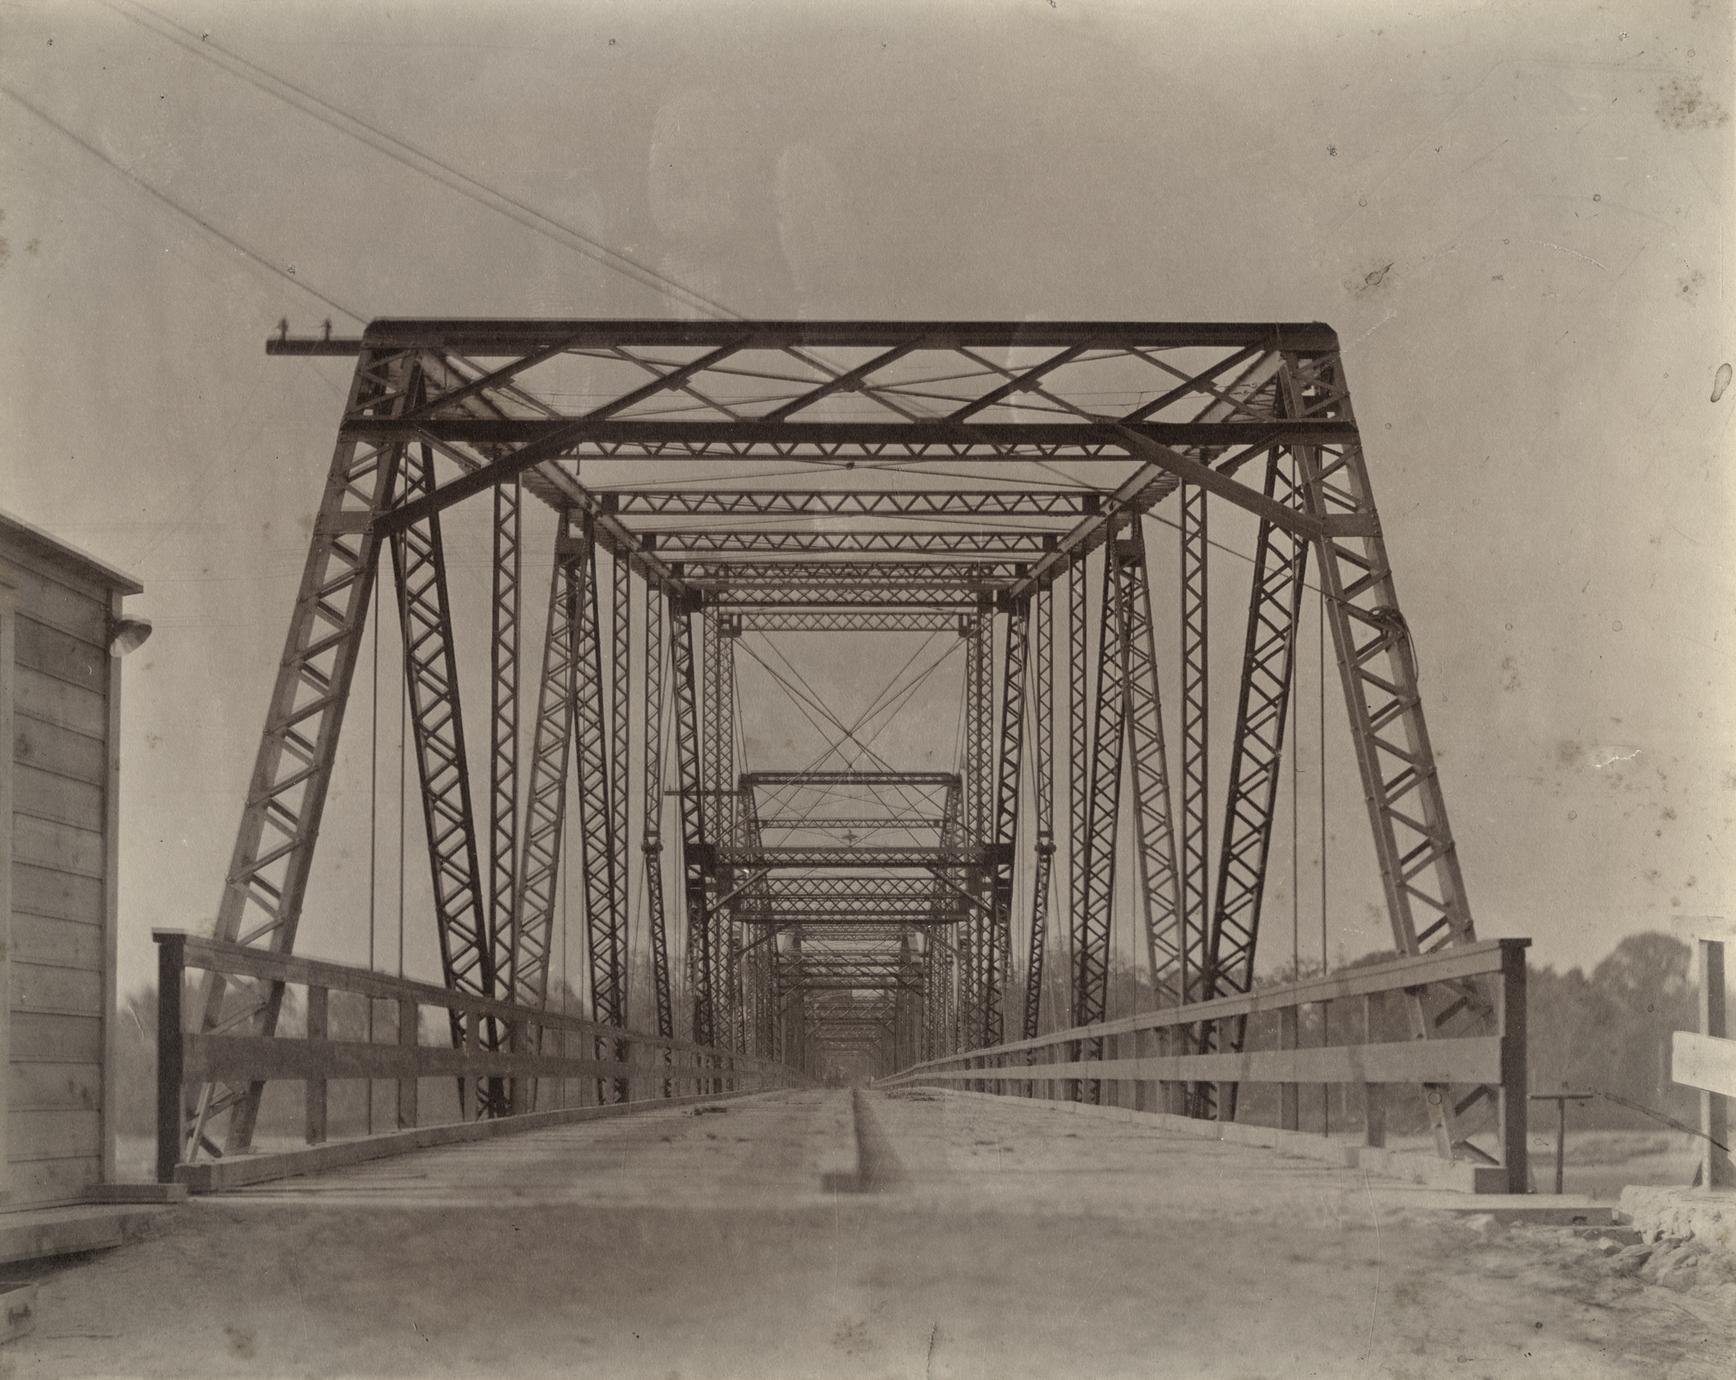 Toll bridge across the Chippewa River in Durand